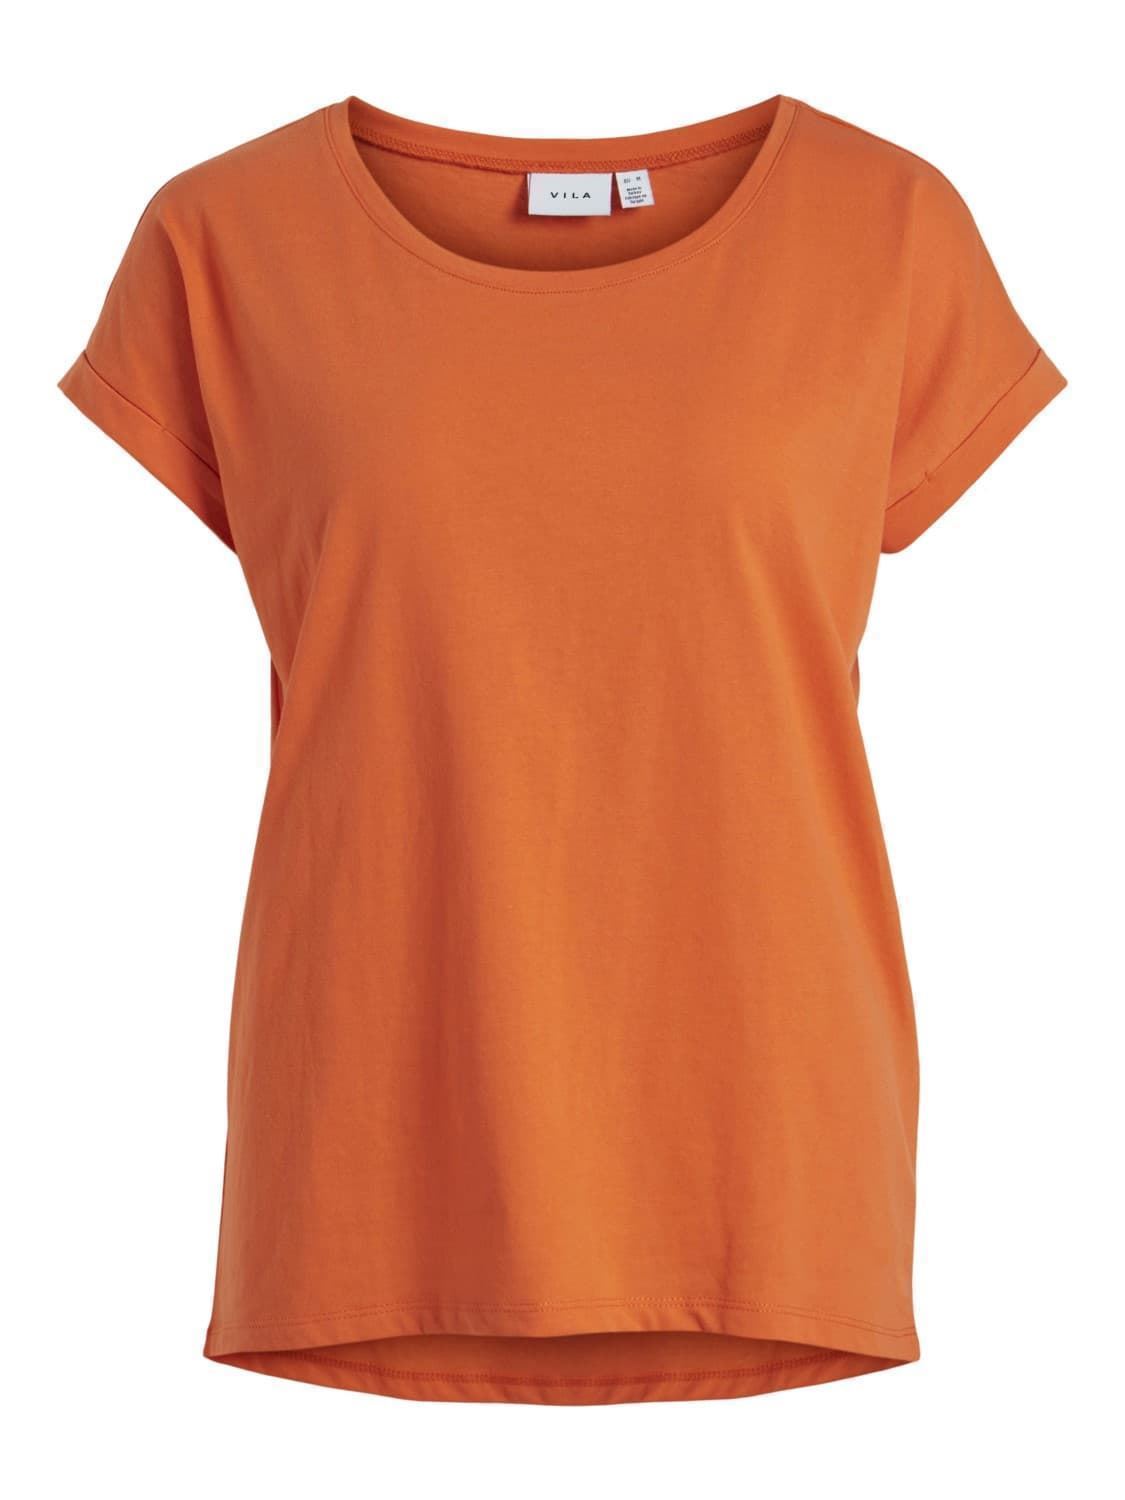 Camiseta naranja vidreamers - Imagen 4